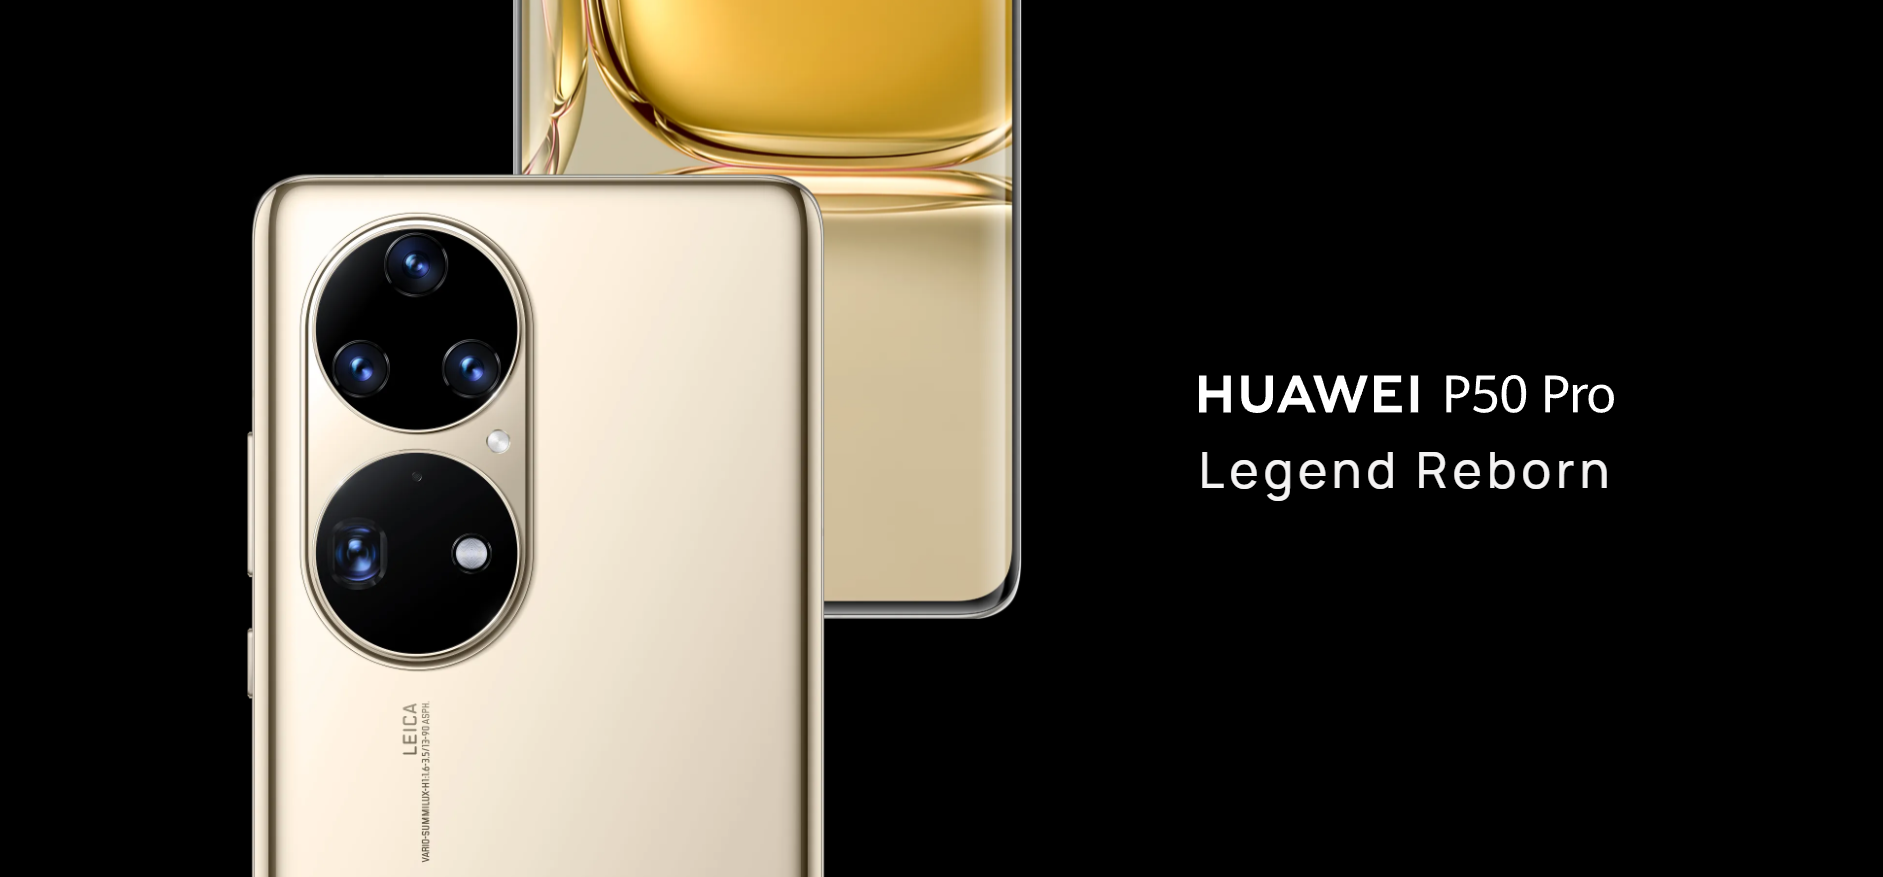 Huawei P50 Pro presentado en Europa: Snapdragon 888, IP68, pantalla de 120 Hz por 1.199 €